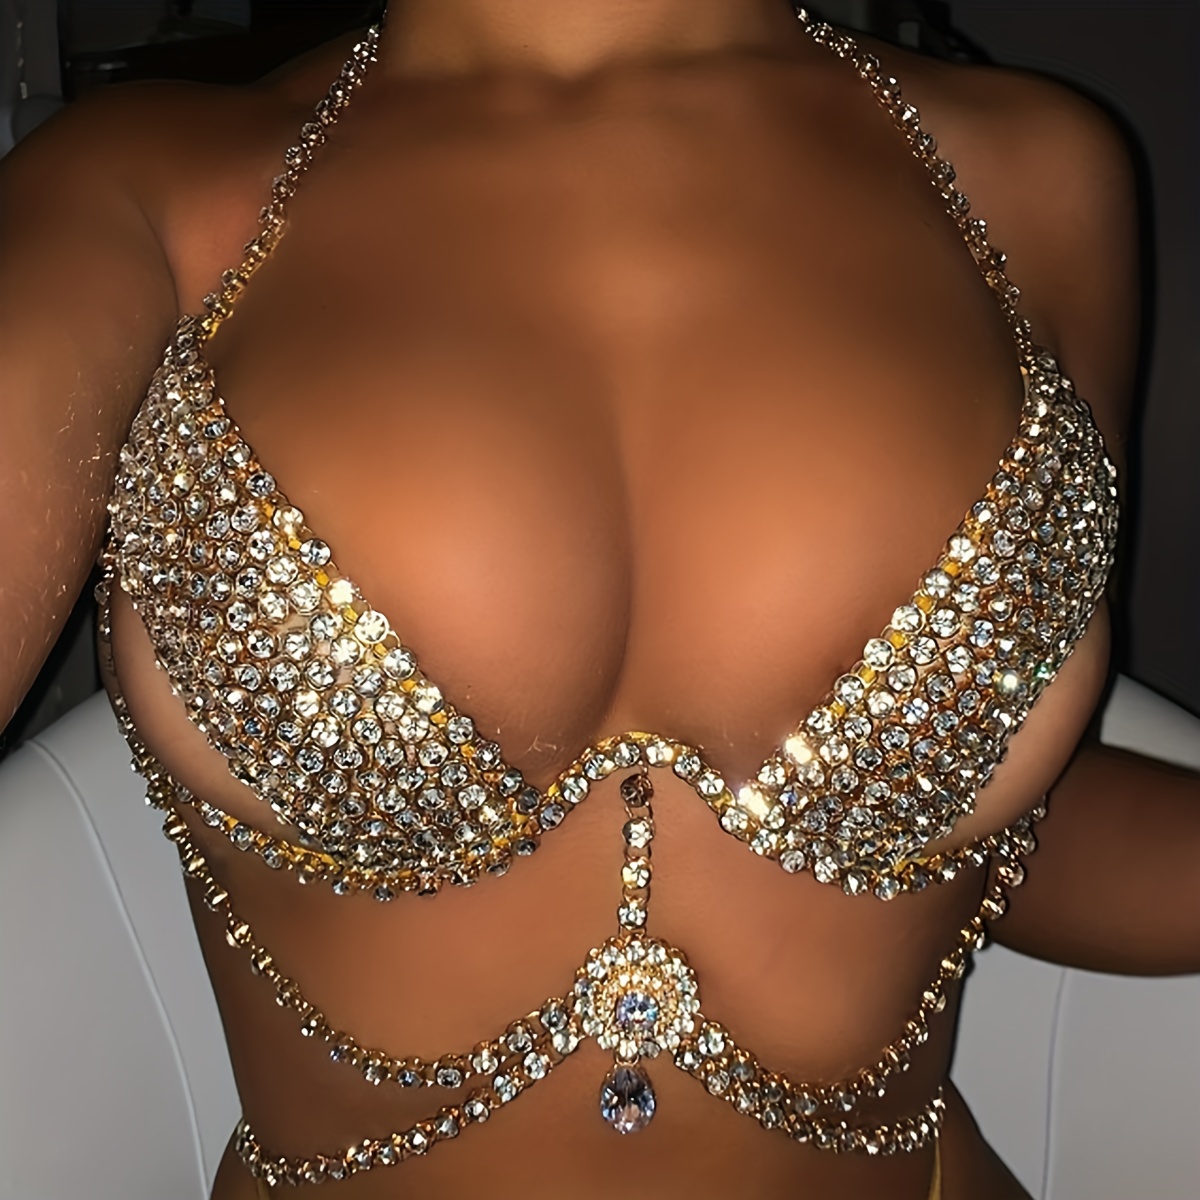 Body Chain Diamond Chest Chain Sparkly Rhinestone Bra Panties Crystal  Bikini Chest Jewelry Lingerie Woman Sexy Nightclub Clothing